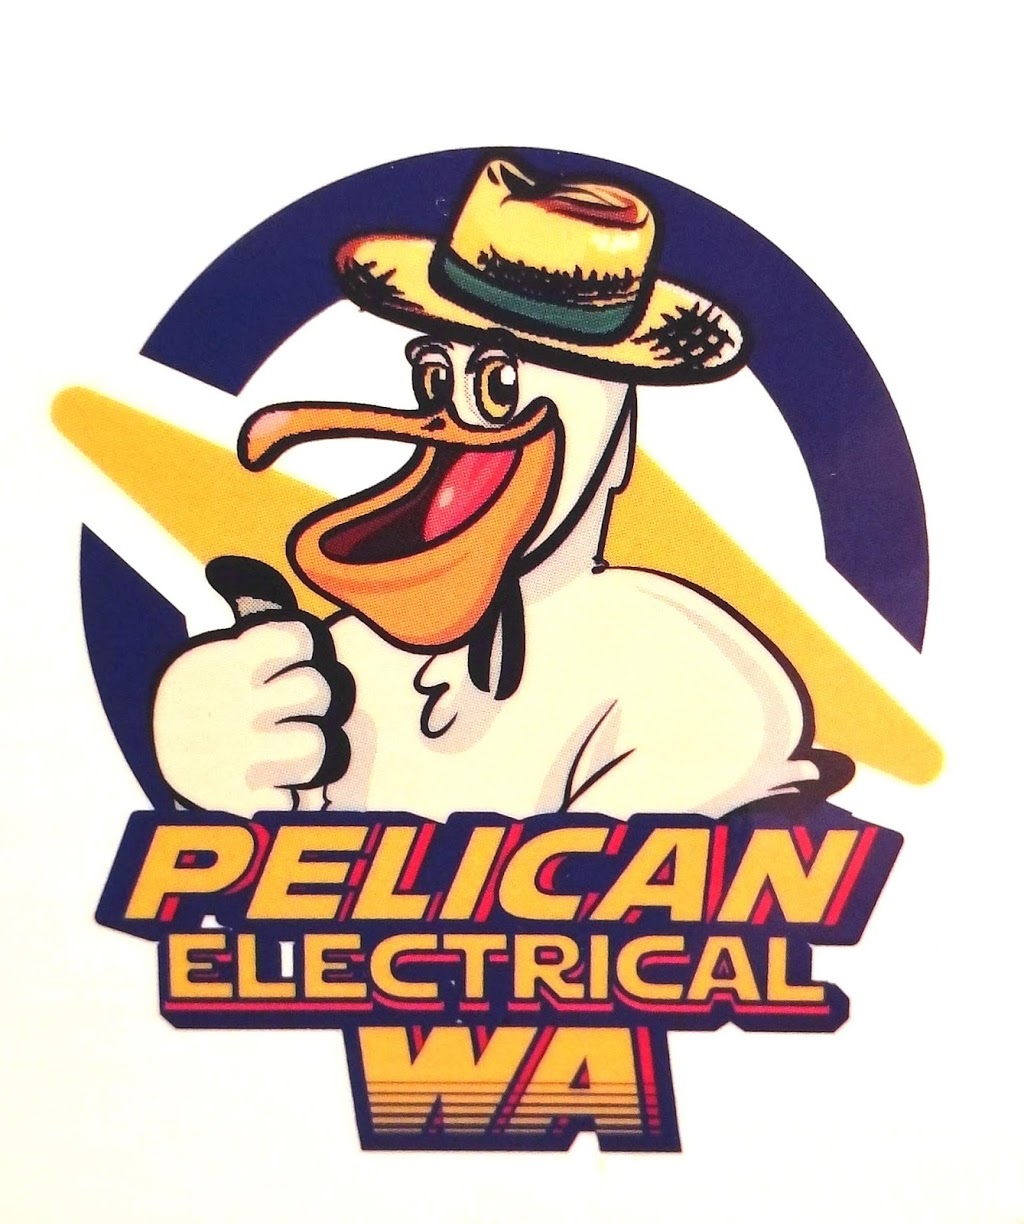 Pelican Electrical WA | 26 Oakover St, East Fremantle WA 6158, Australia | Phone: 0402 301 340